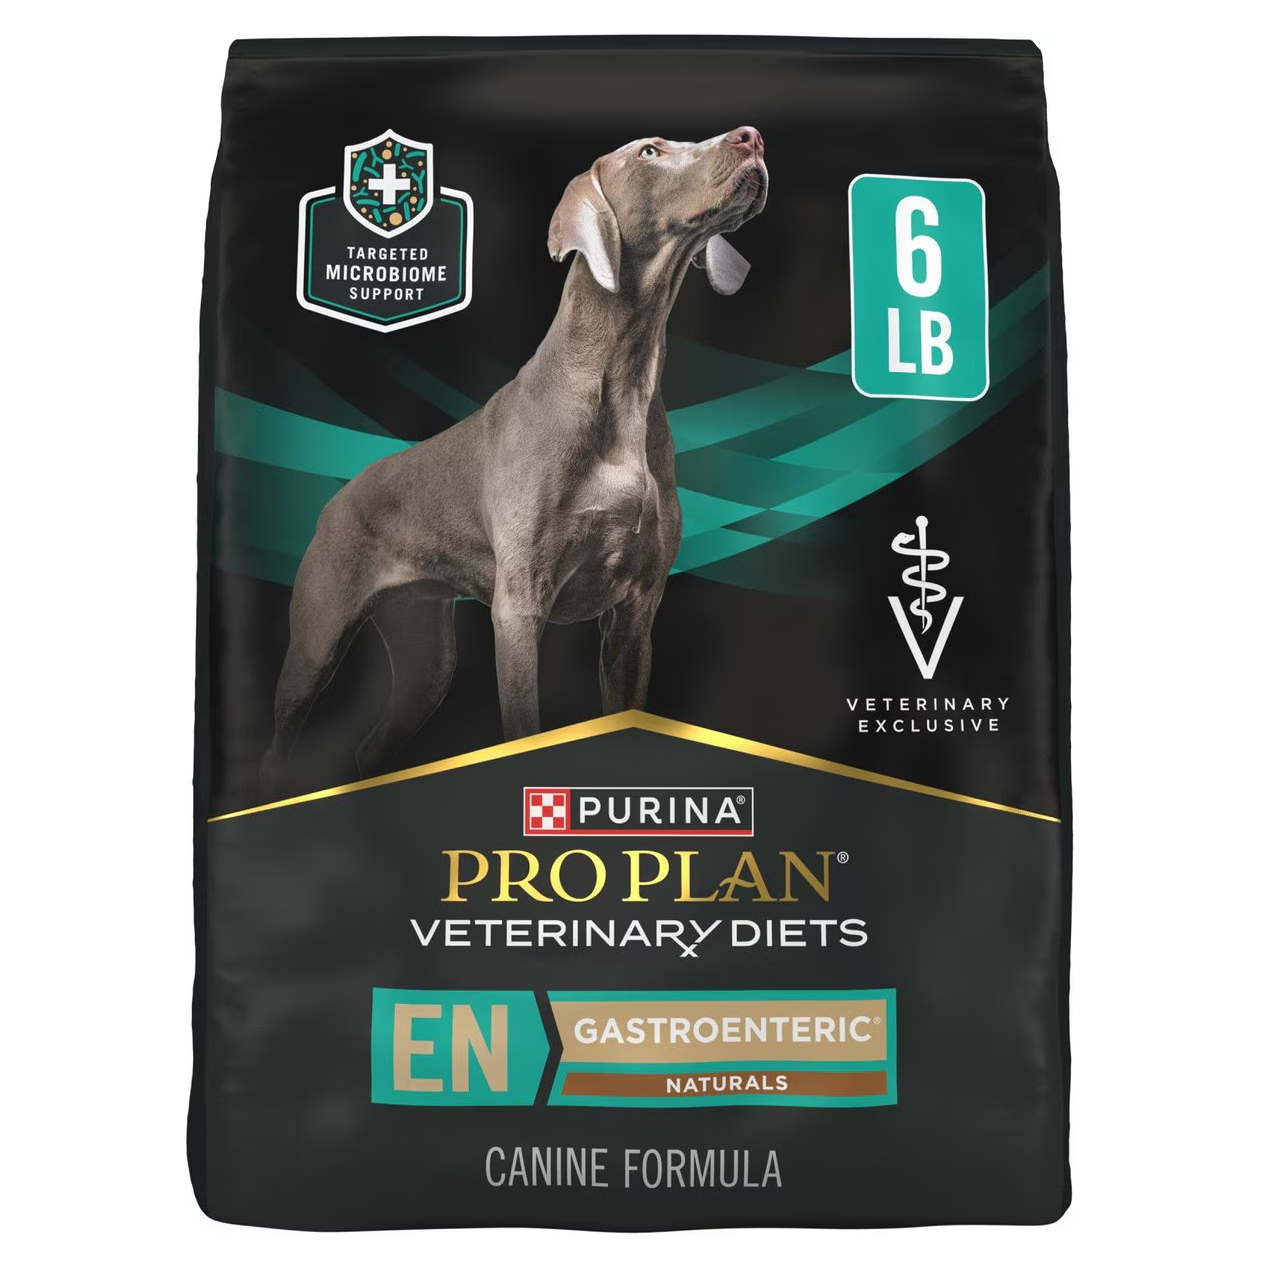 Purina Pro Plan Veterinary Diets Gastroenteric Dry Dog Food